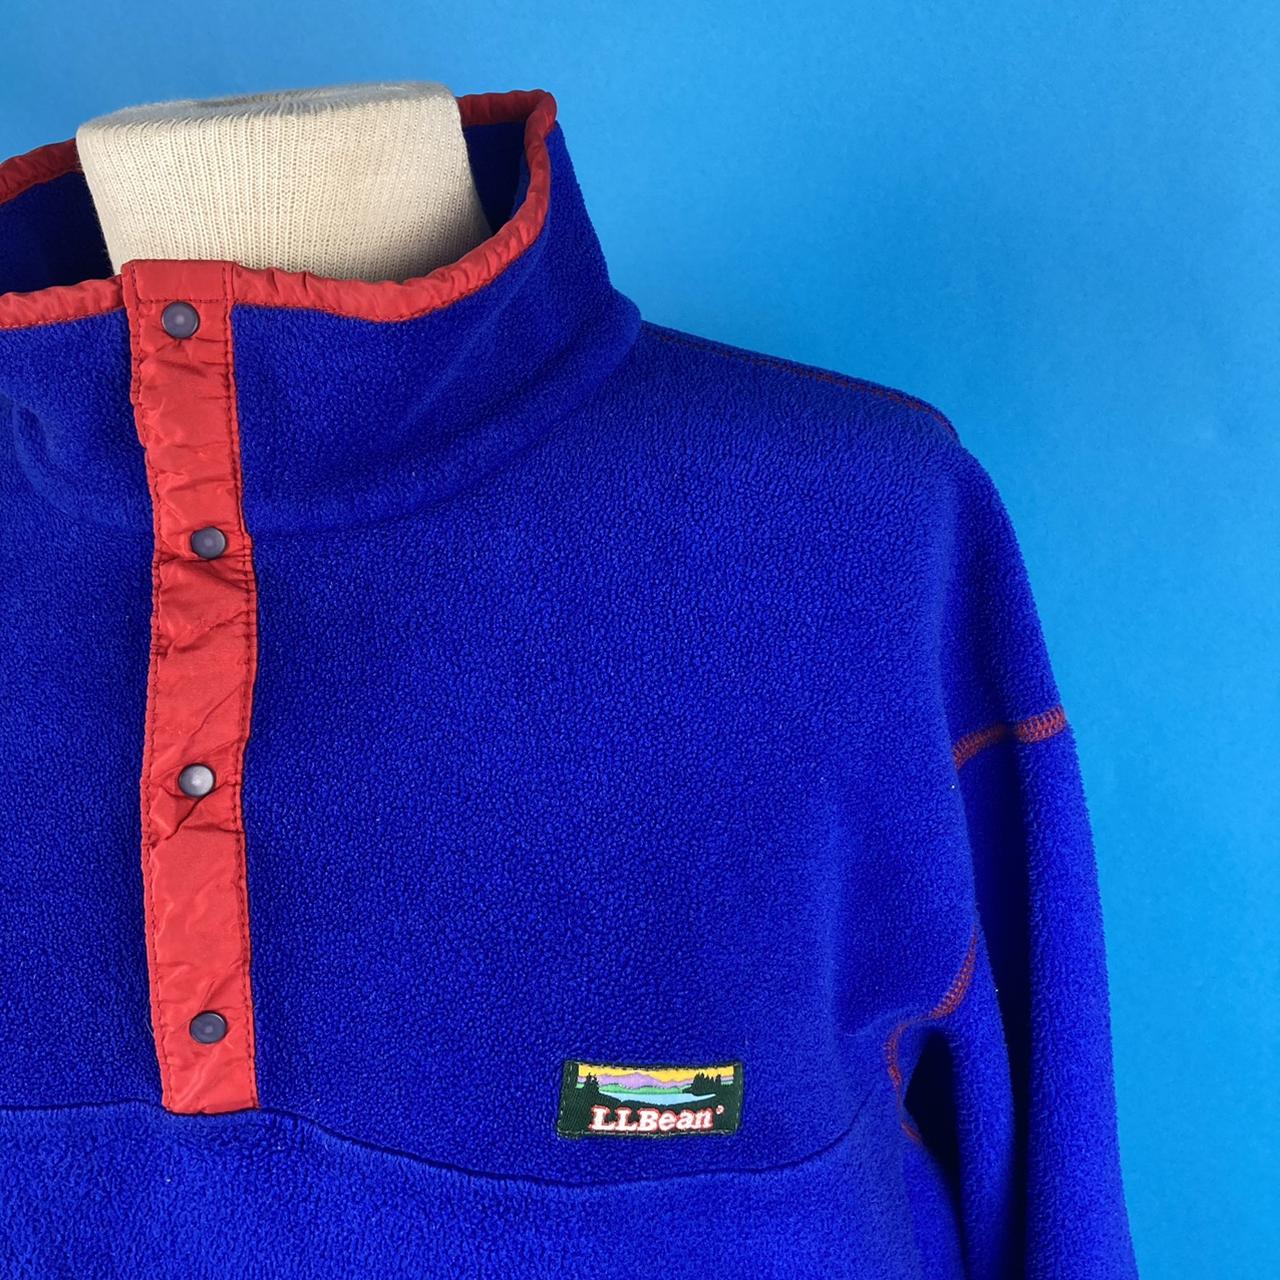 Vintage 70s - 80s LL Bean Royal blue & red jacket...